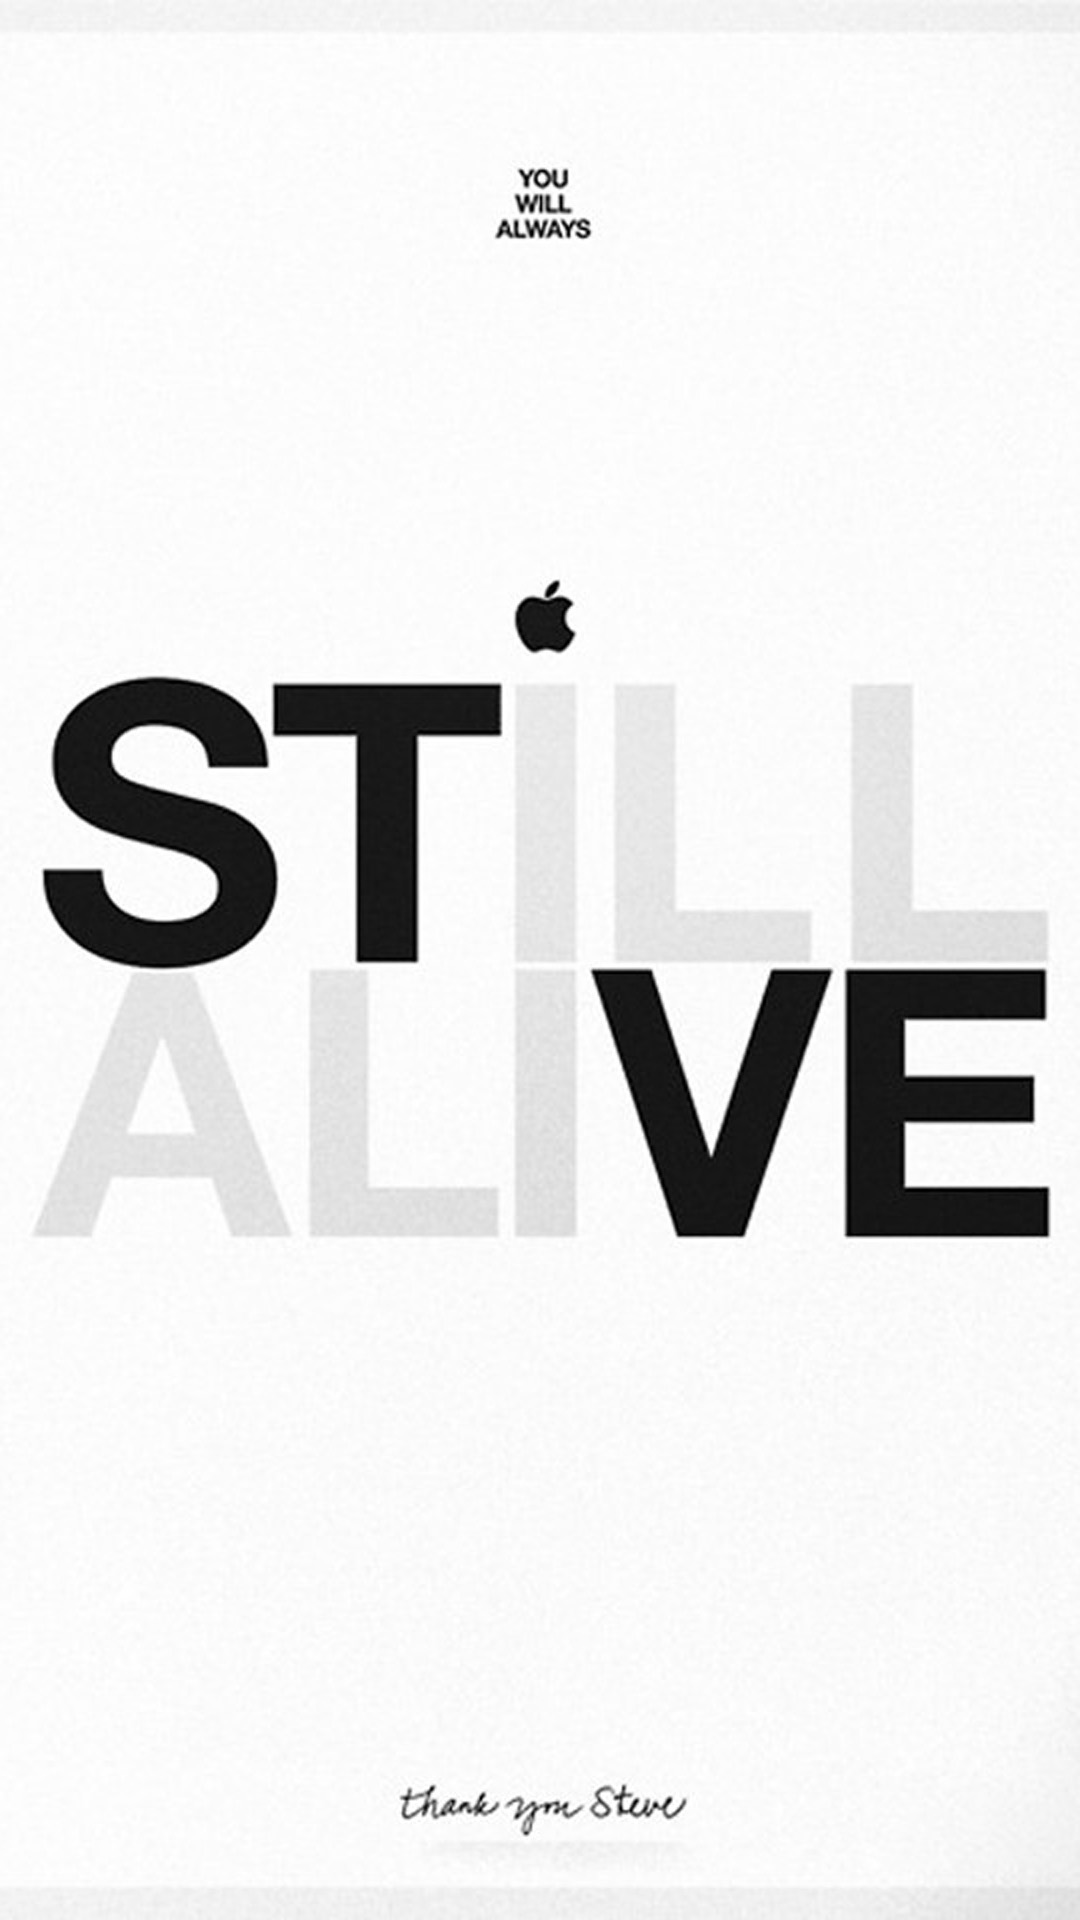 Steve jobs apple still alive HD Wallpaper iPhone 6 plus ...